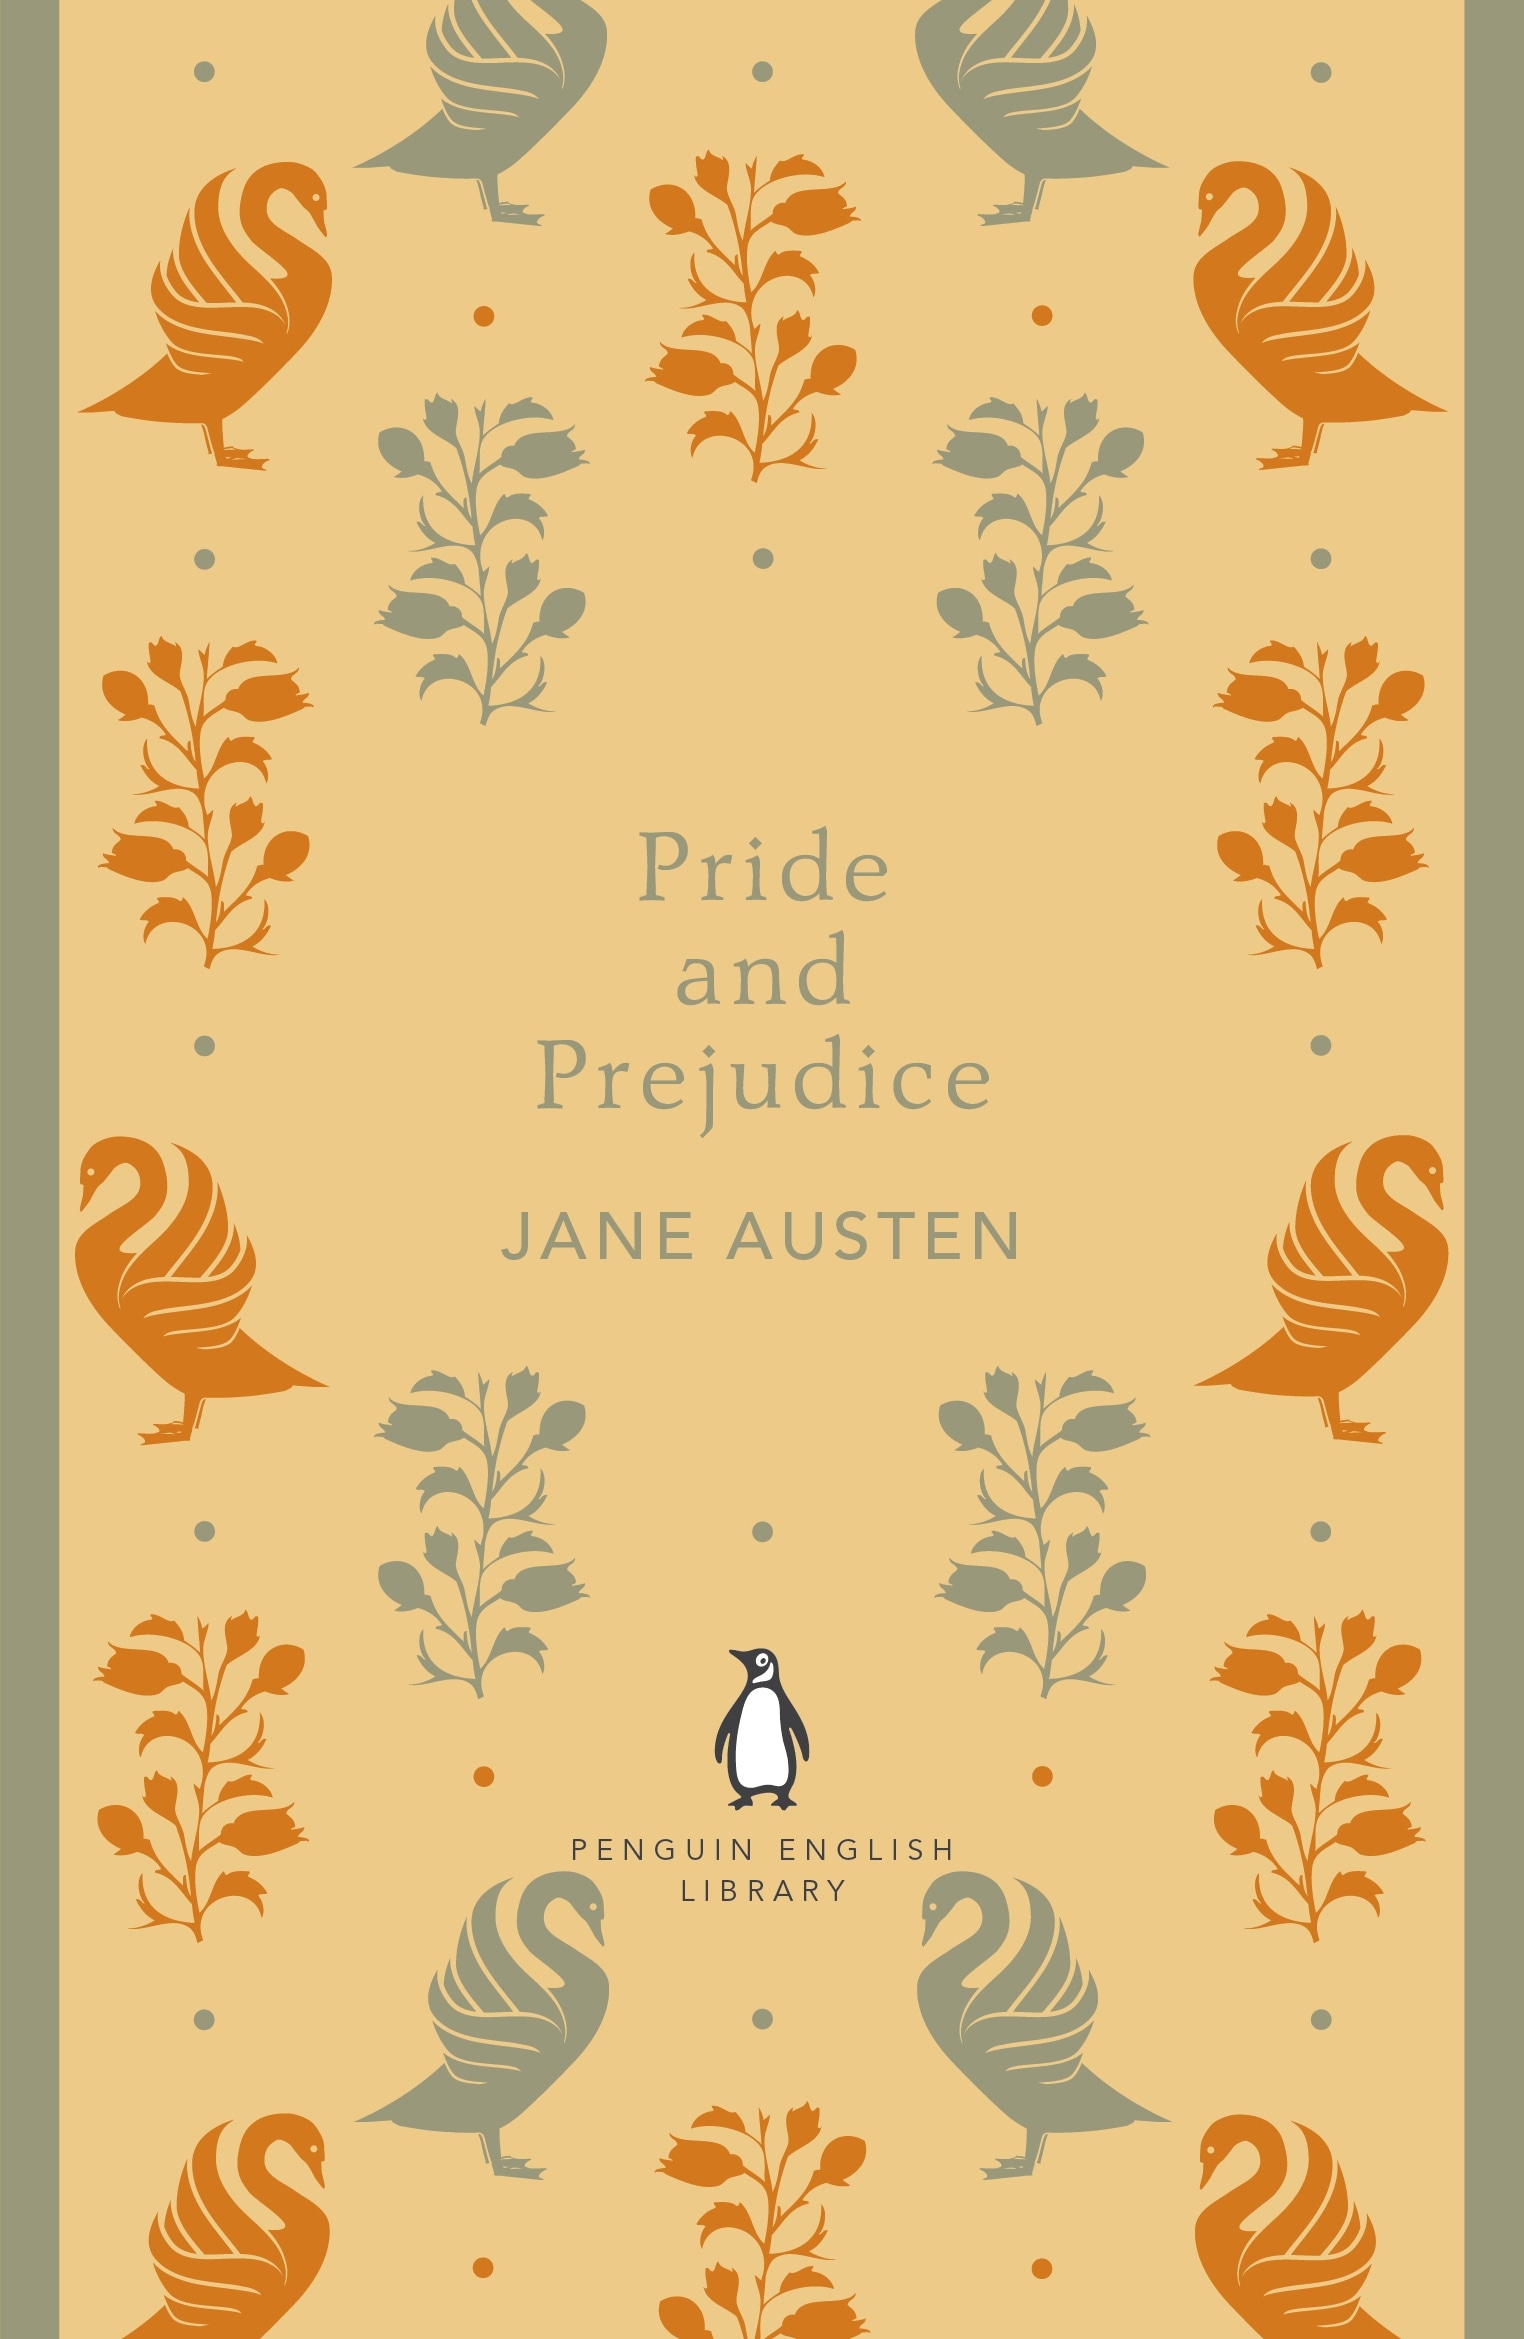 Book “Pride and Prejudice” by Jane Austen — December 6, 2012